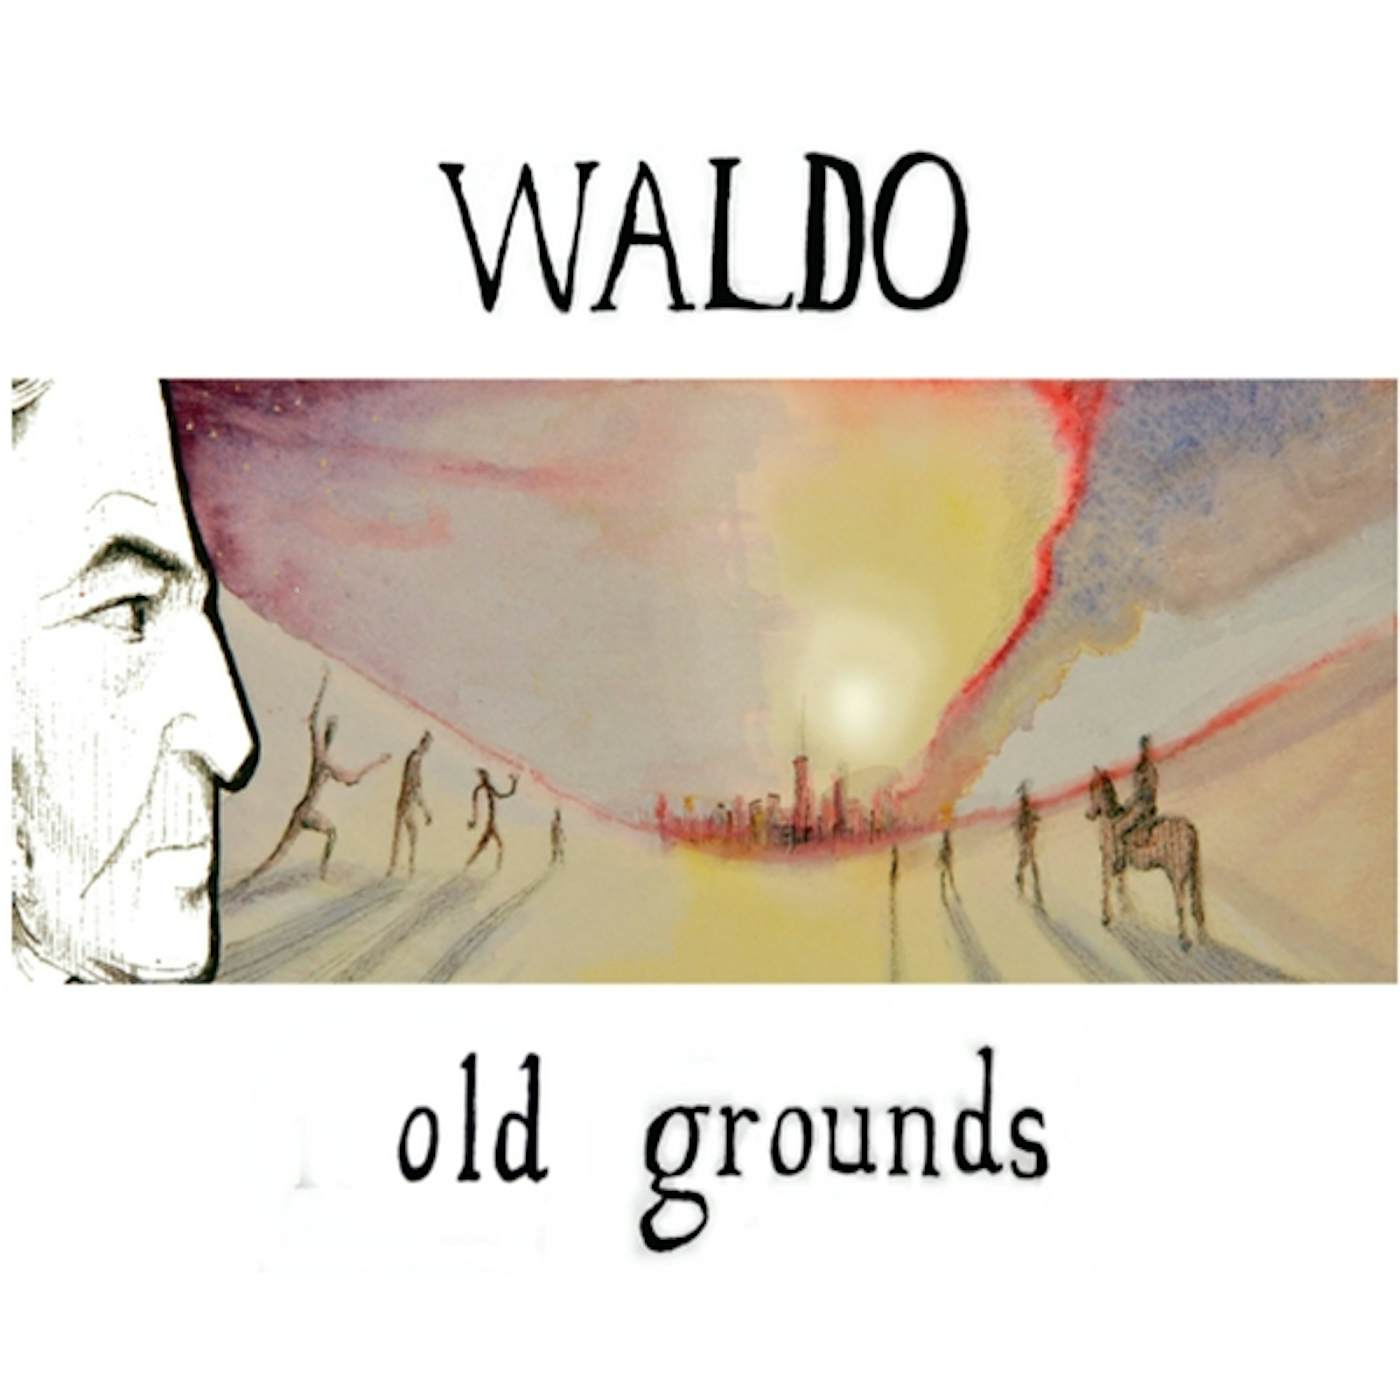 Waldo OLD GROUNDS CD